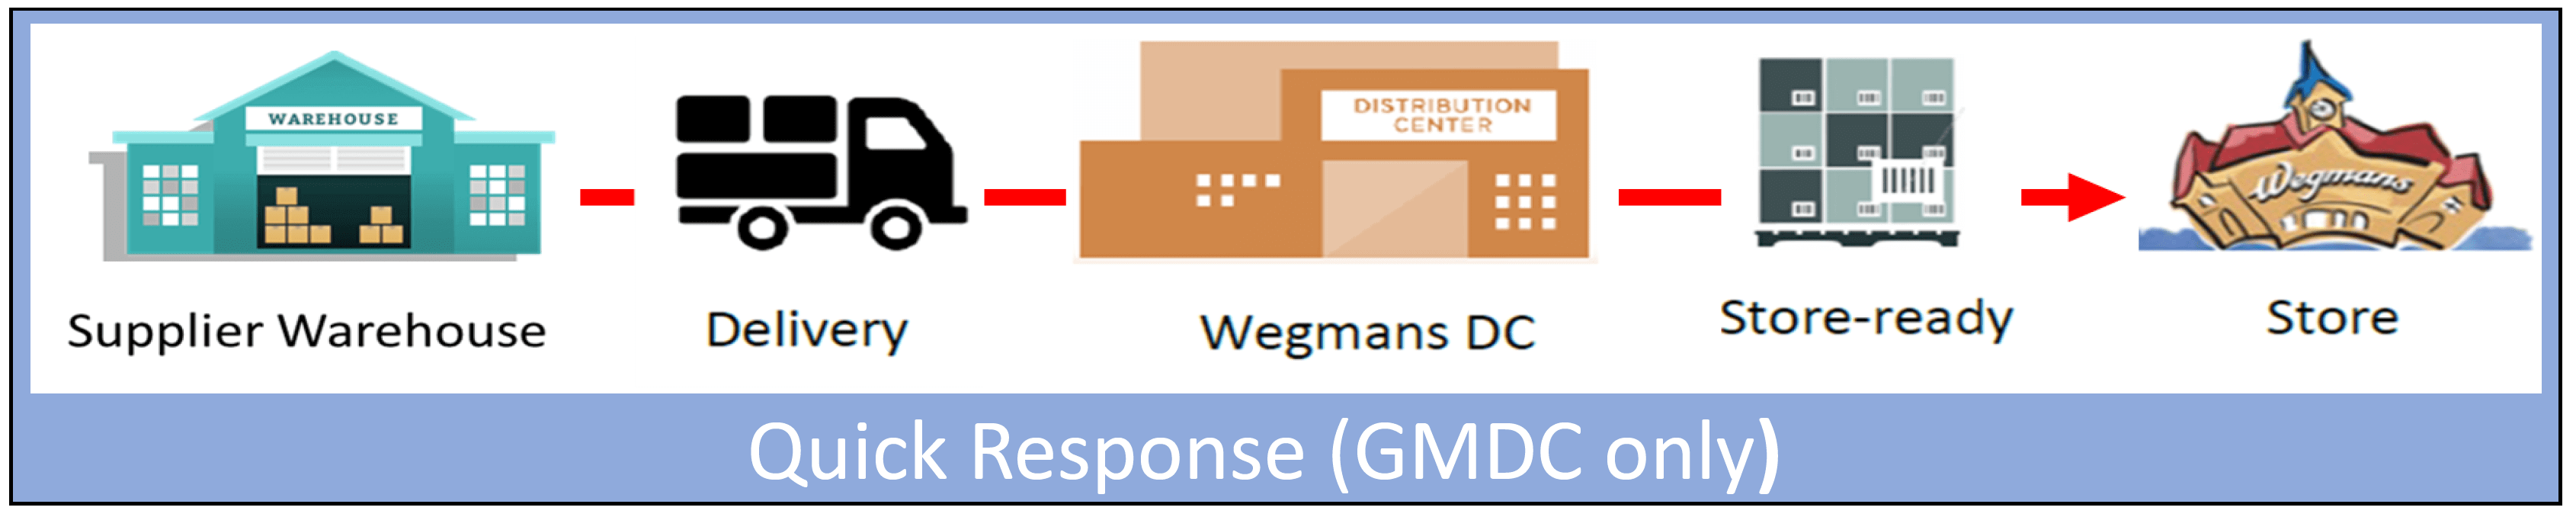 Wegmans Supply Chain Quick Response (GMDC) Only